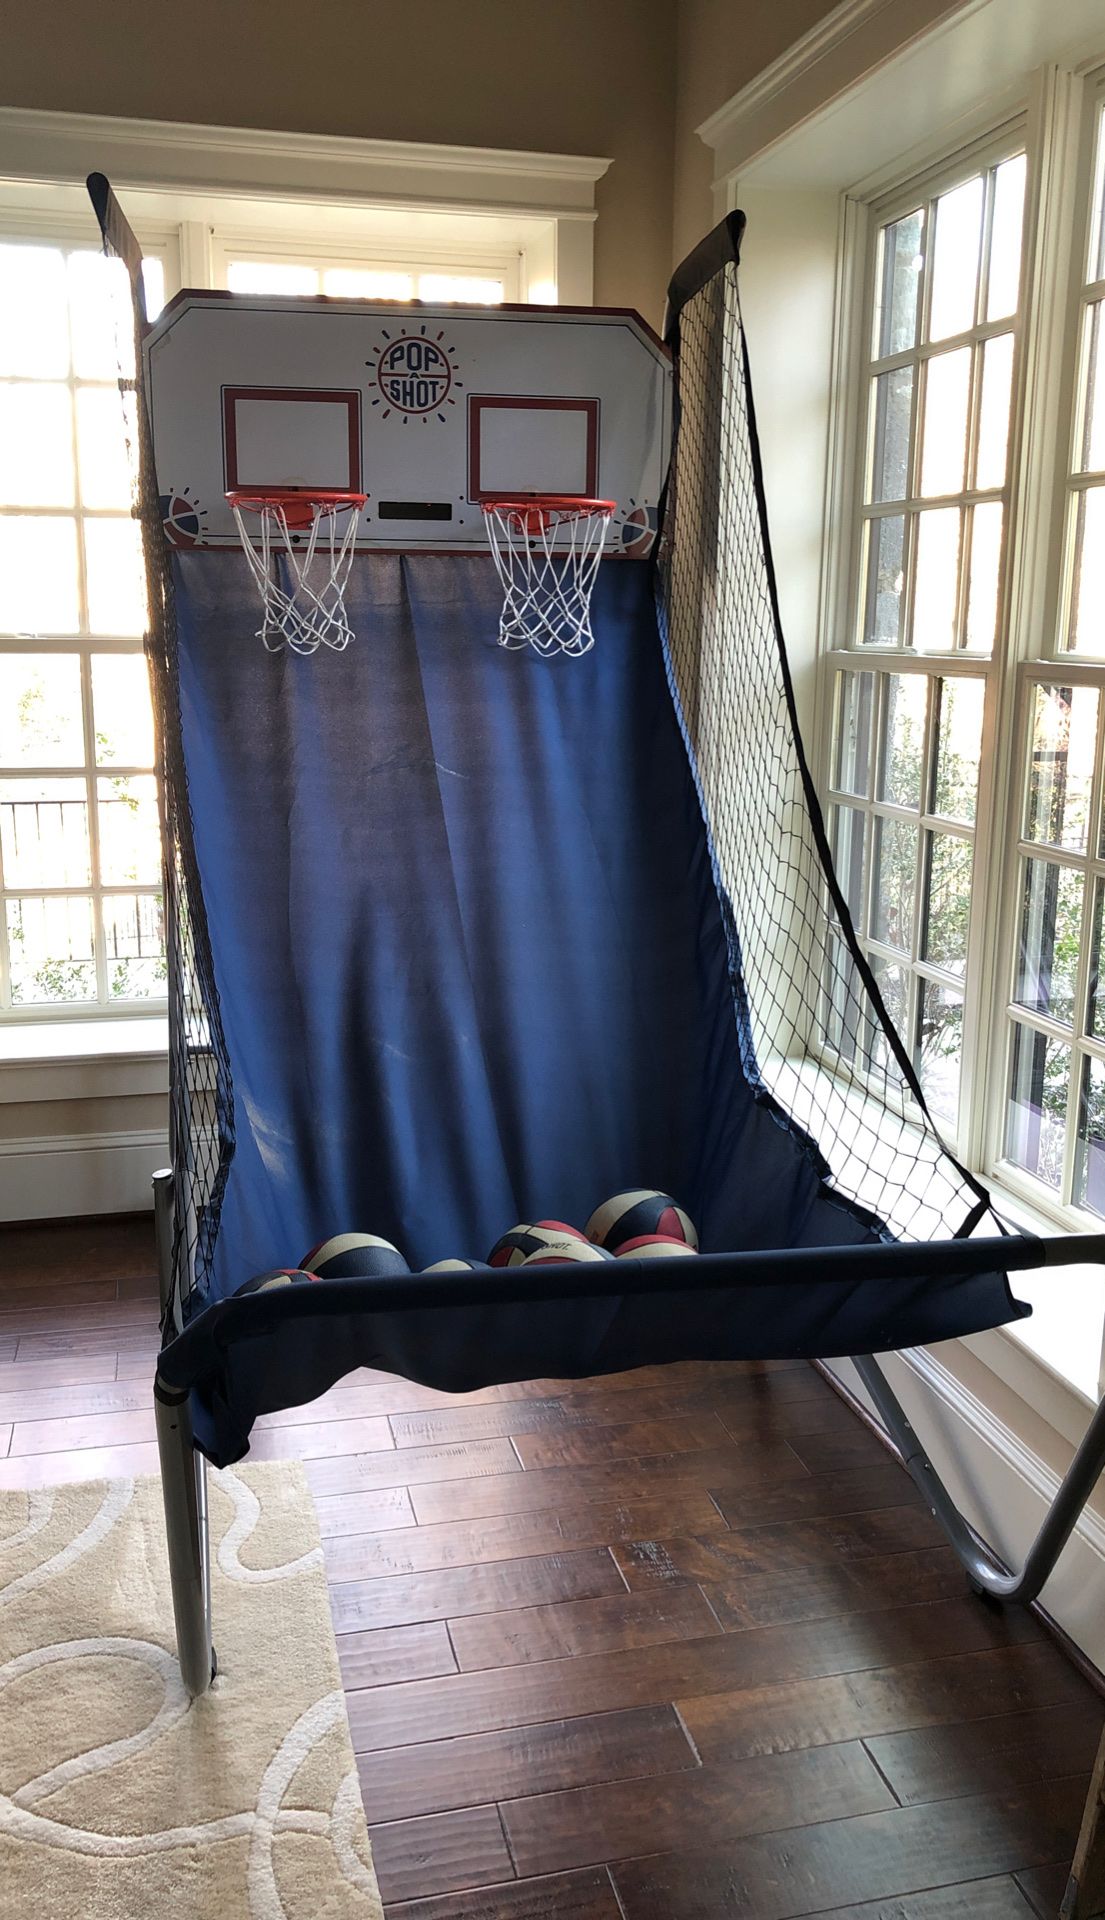 Pop a shot 2 player indoor basketball hoop